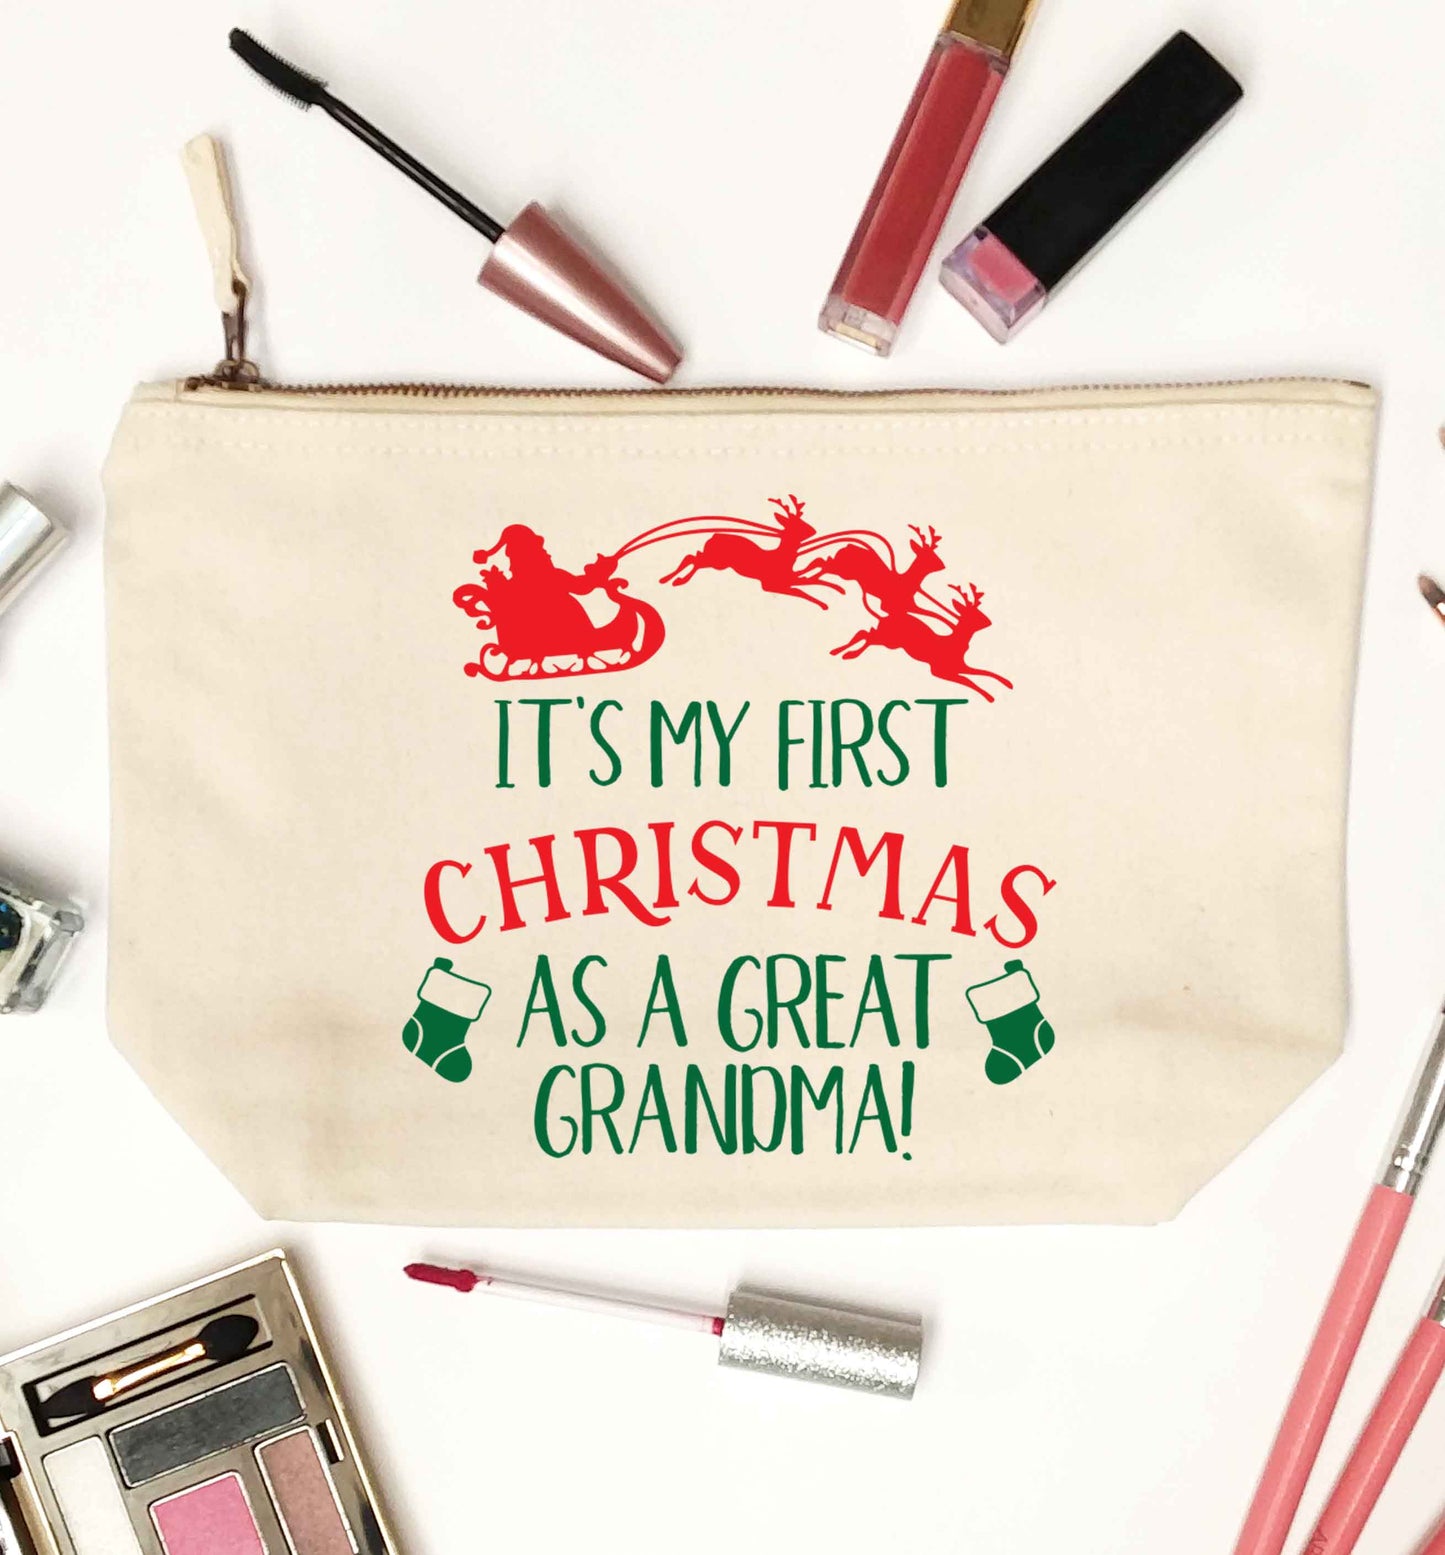 It's my first Christmas as a great grandma! natural makeup bag